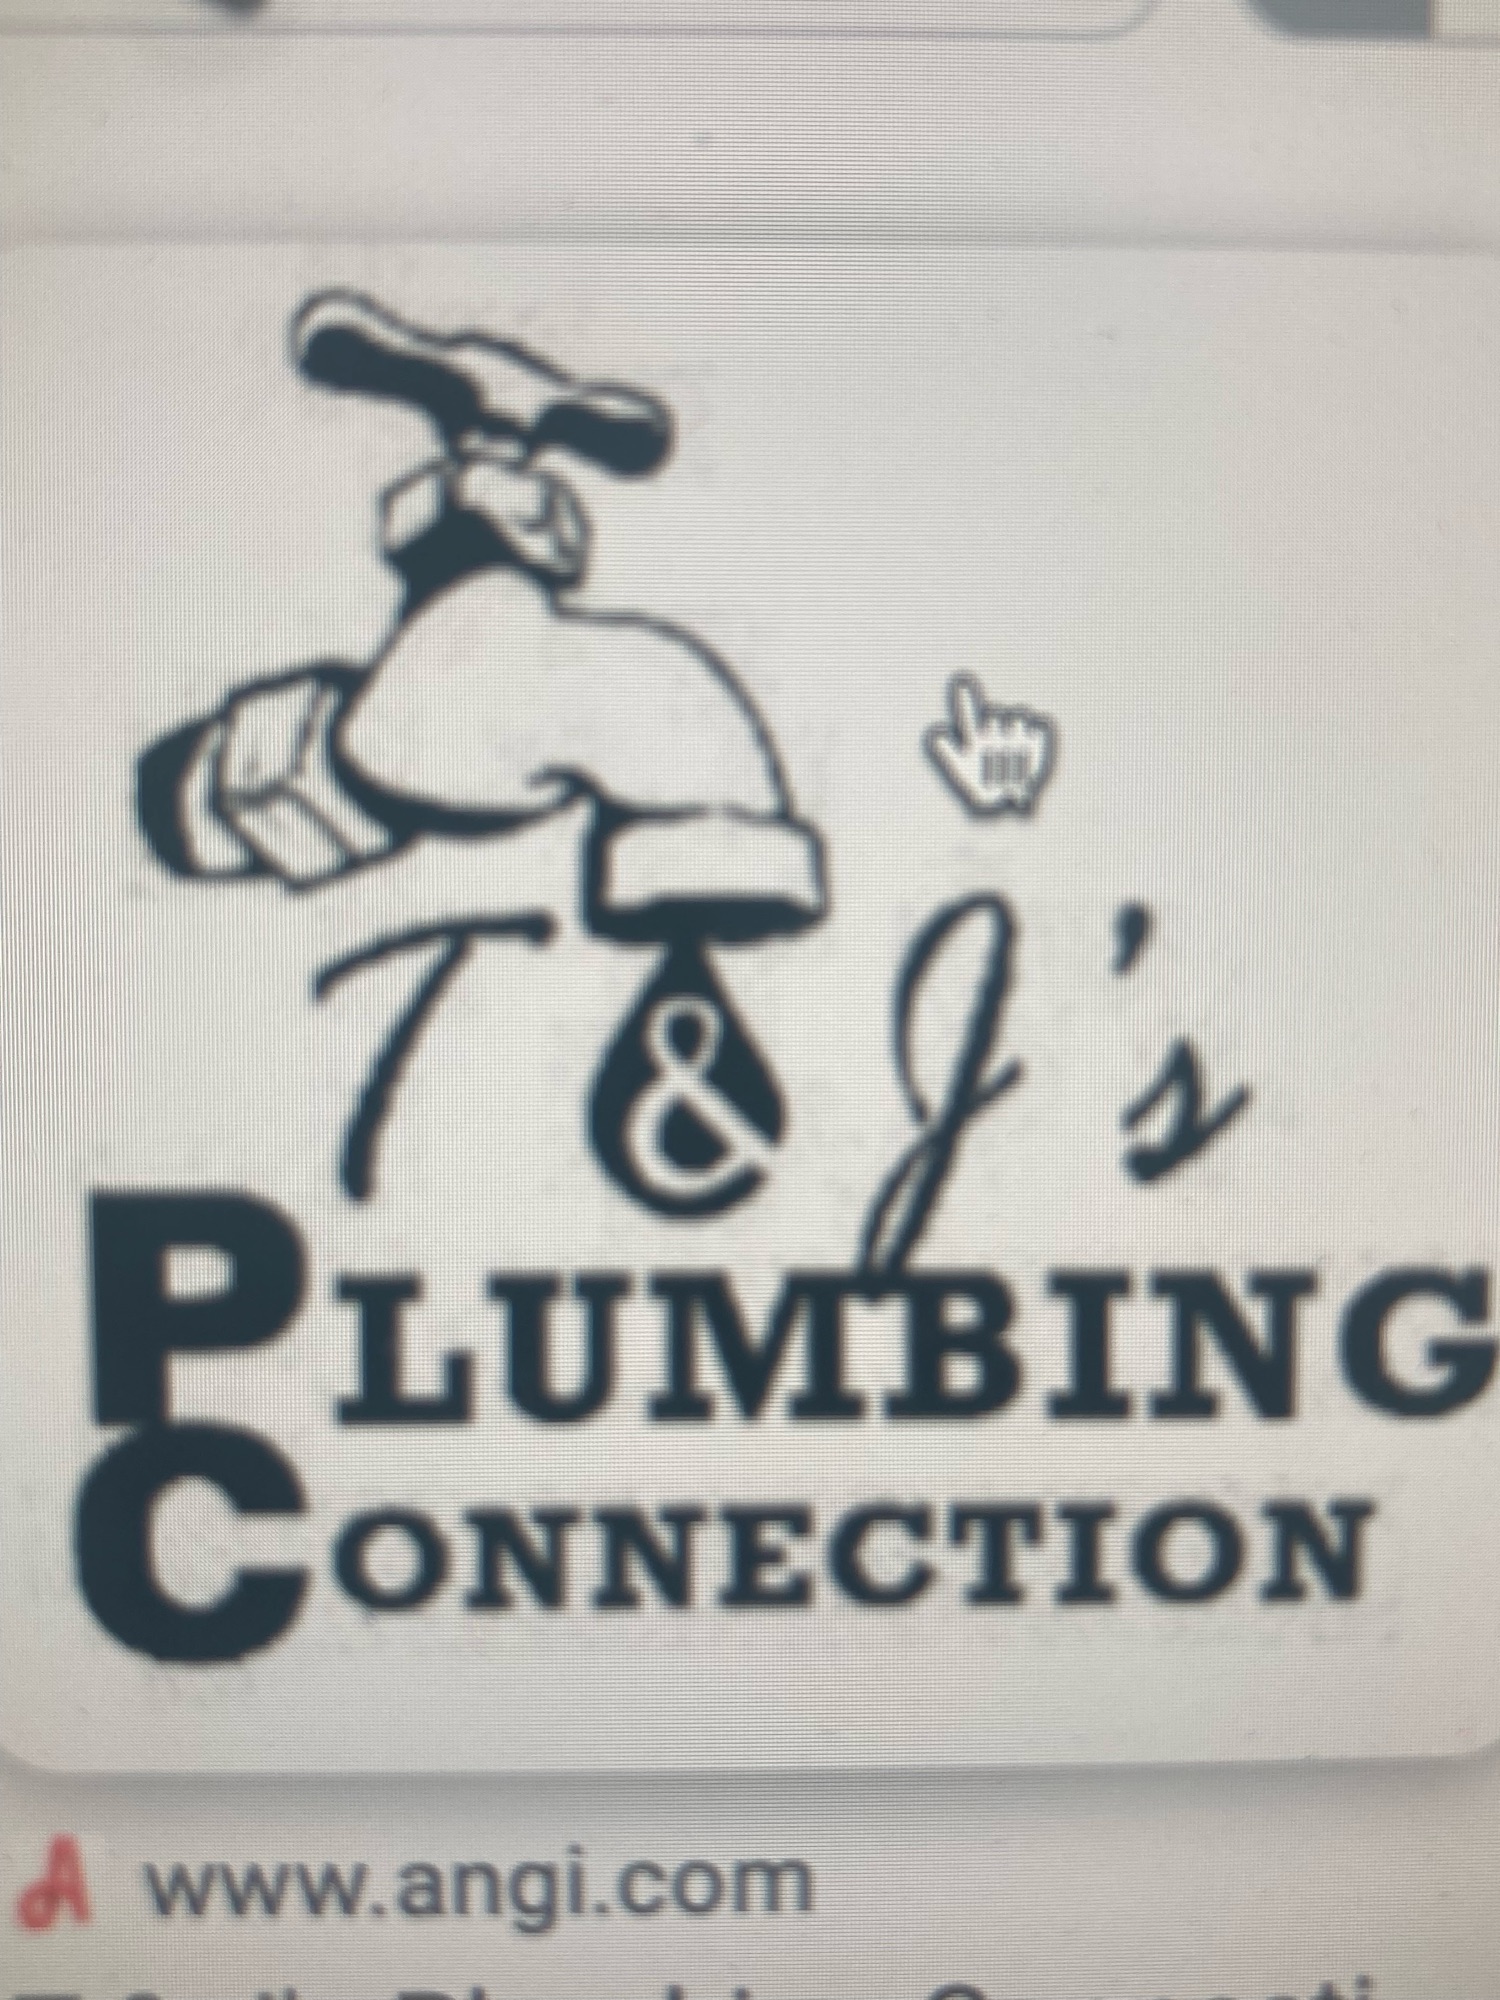 T & J's Plumbing Connection Logo